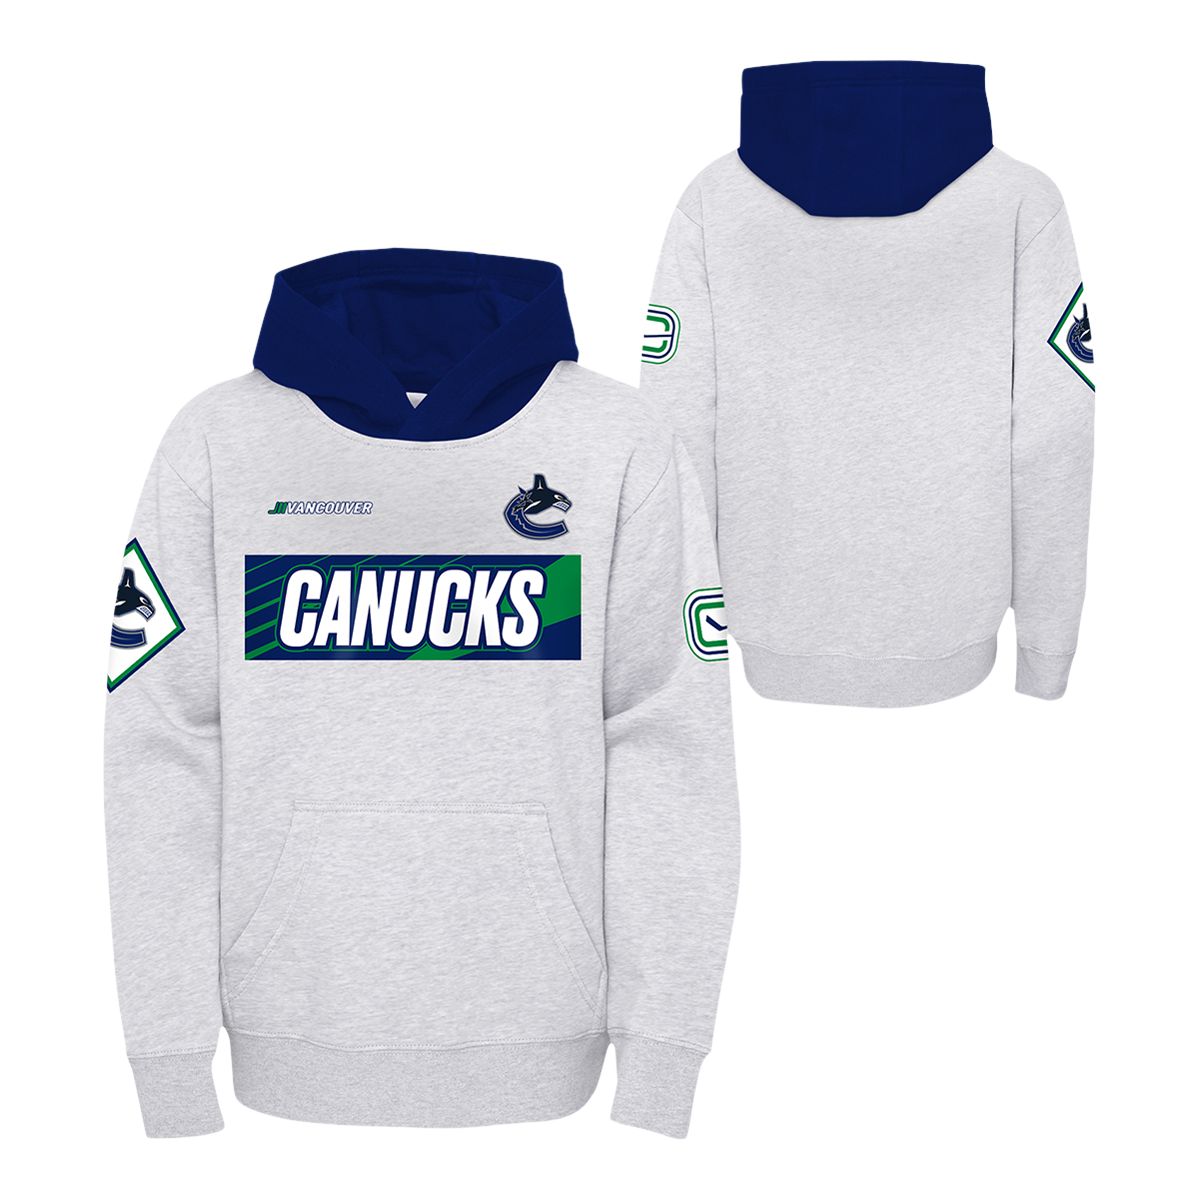 NHL Vancouver Canucks Hoodies & Sweatshirts Tops, Clothing